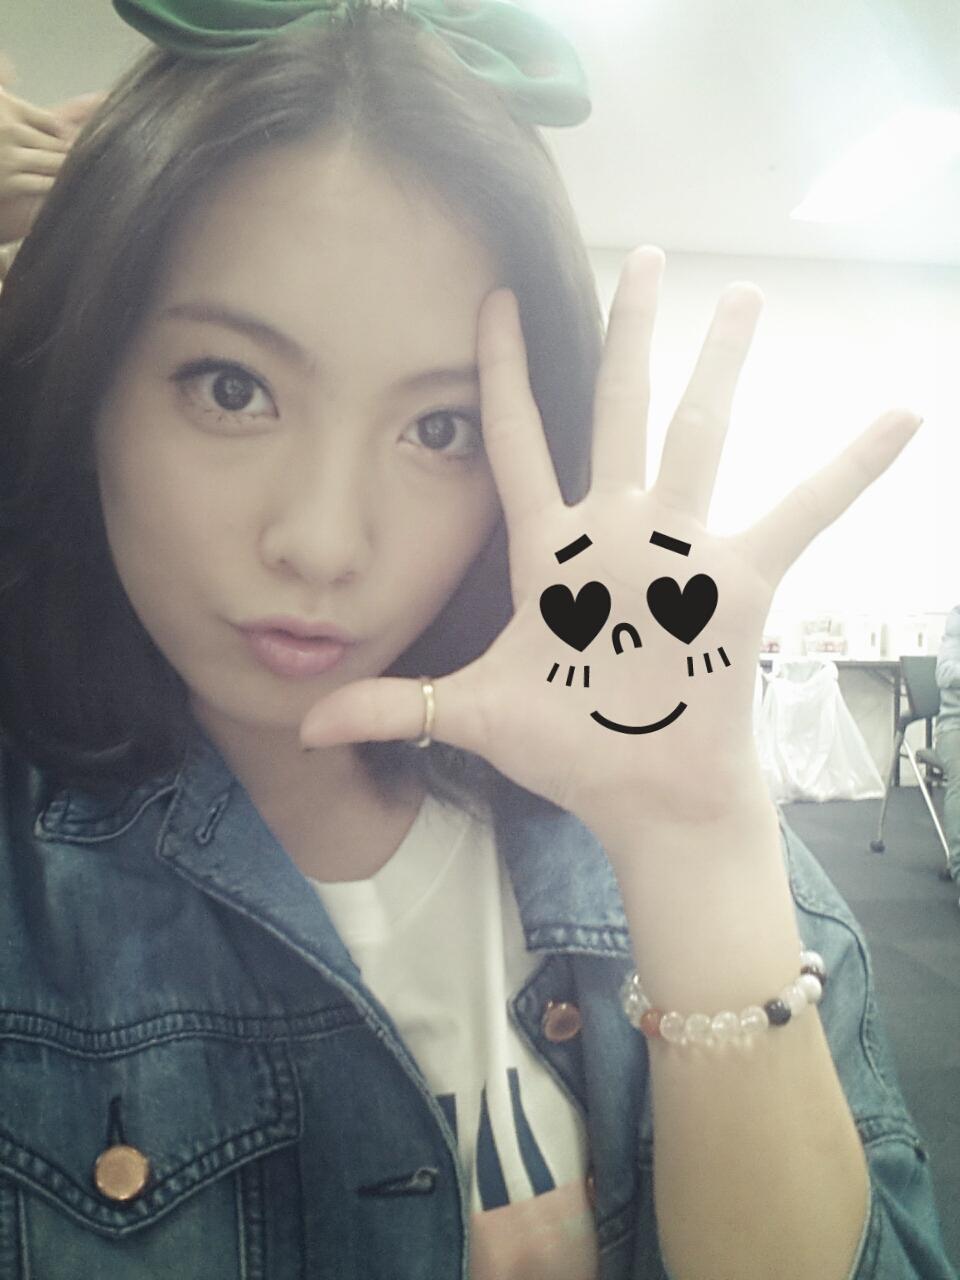 [خبر] كانغ جي يونغ لها يداين كبيرتان بجحم وجهها ..! Tumblr_mc8z95QuGZ1rw9k3qo1_1280